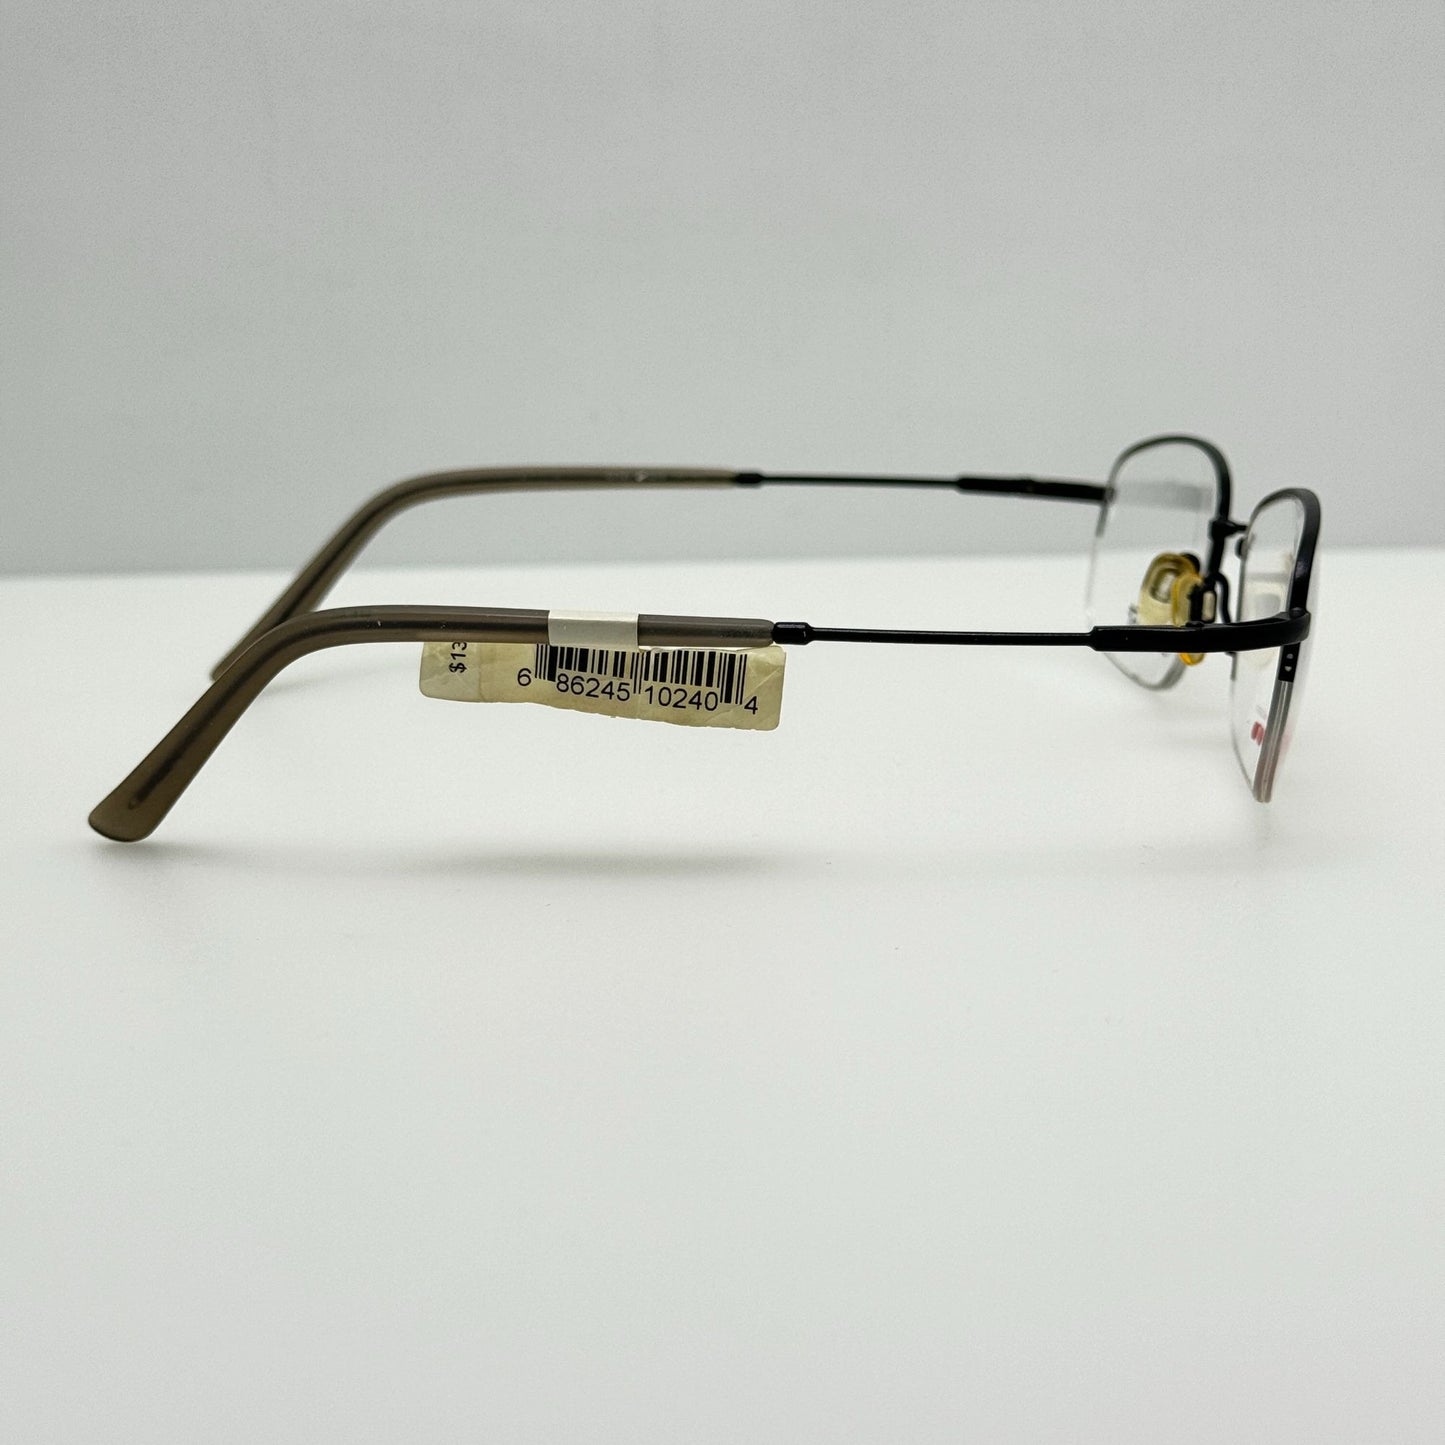 Easytwist Eyeglasses Eye Glasses Frames CT 131 90 54-19-140